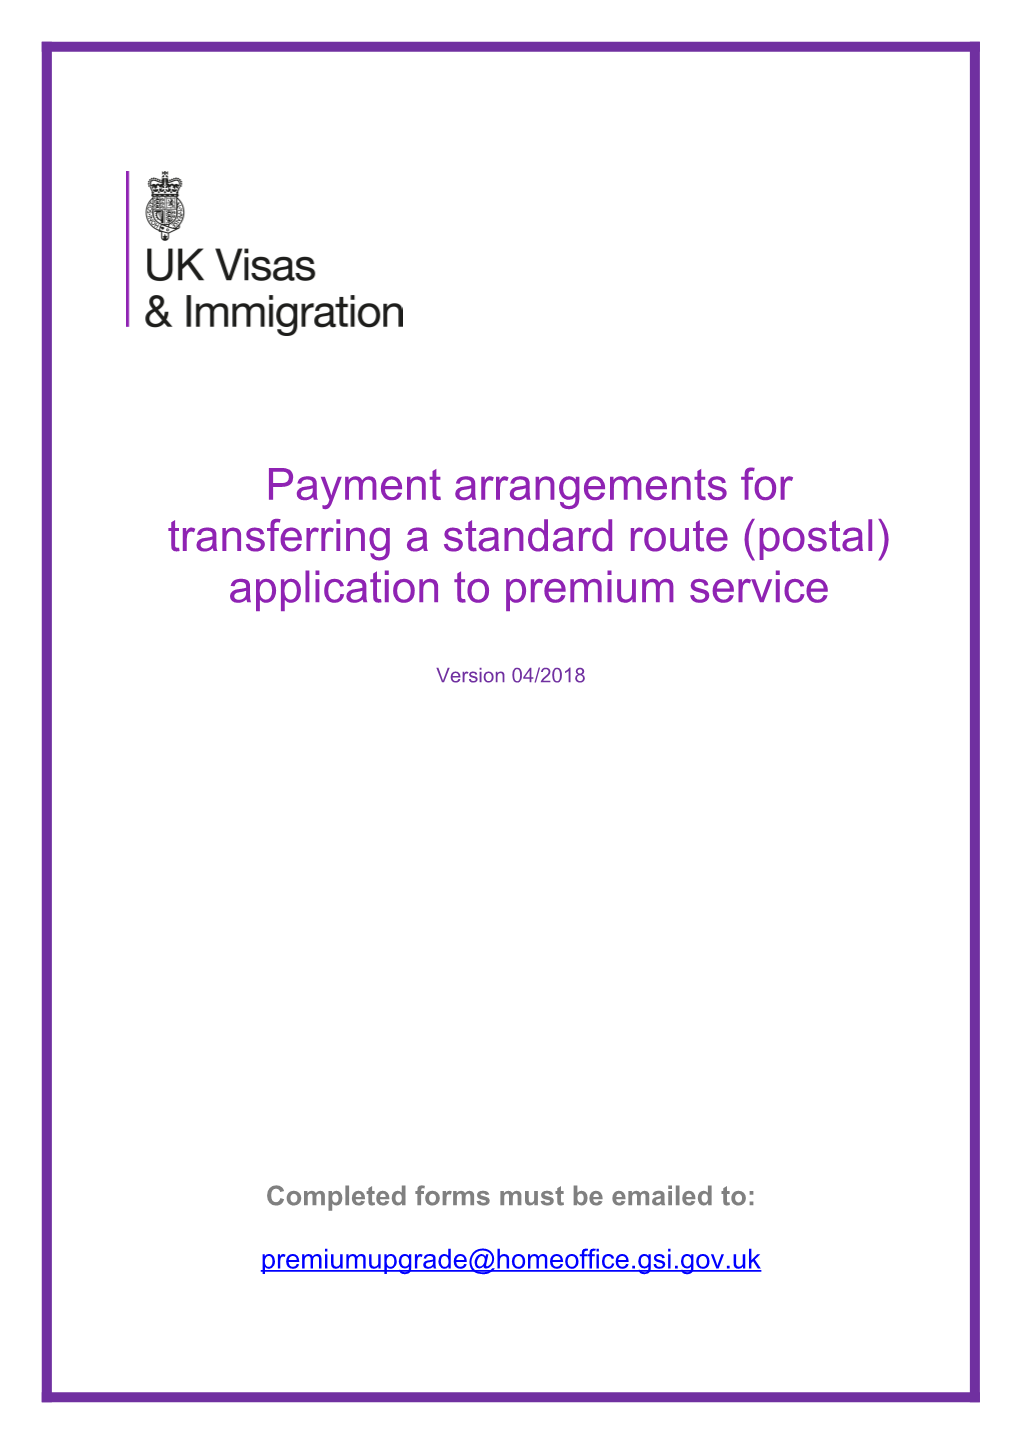 Transferring a Standard Route (Postal) Application Topremium Service